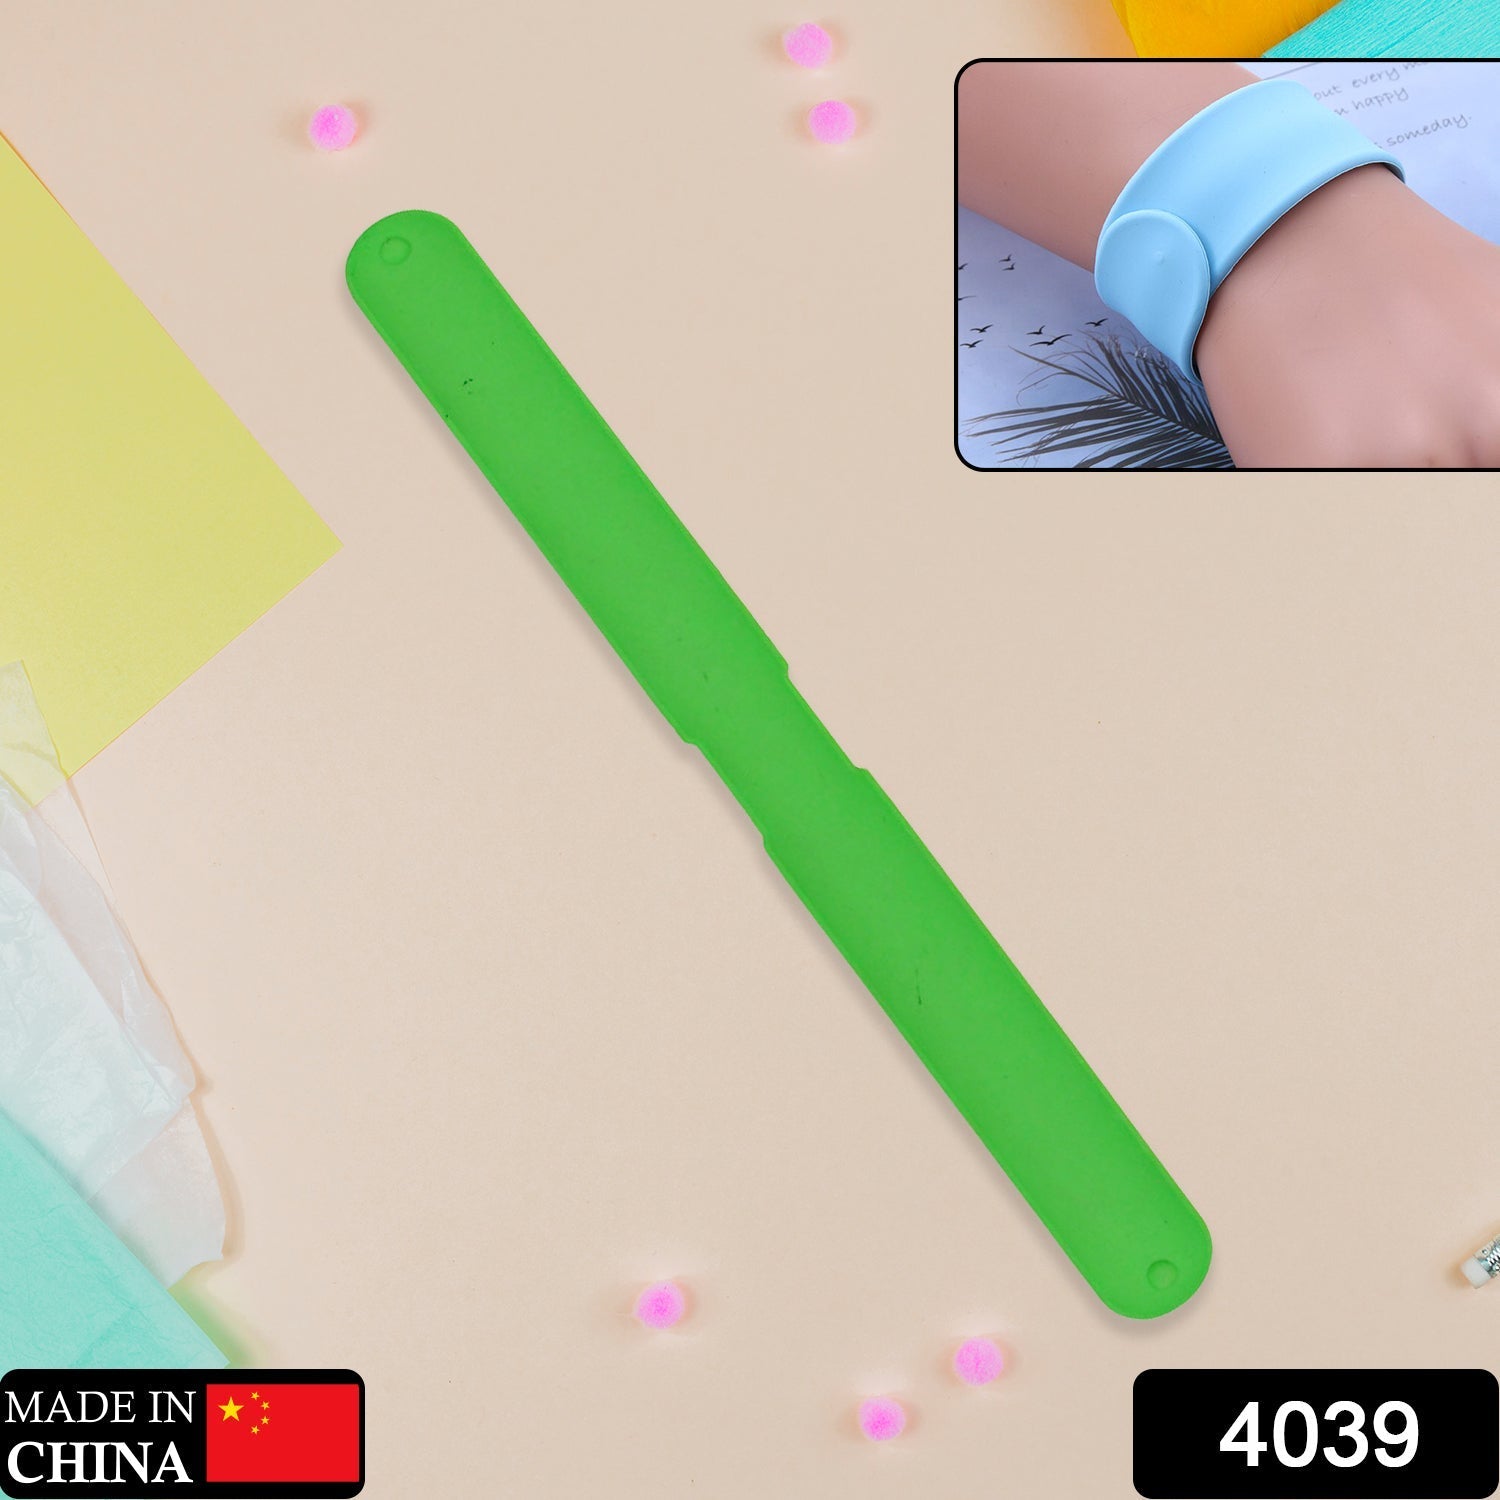 4039 Slap Bracelets for Kids Boys Girls - Silicone Spiky Snap Wristbands (Multicolor) 